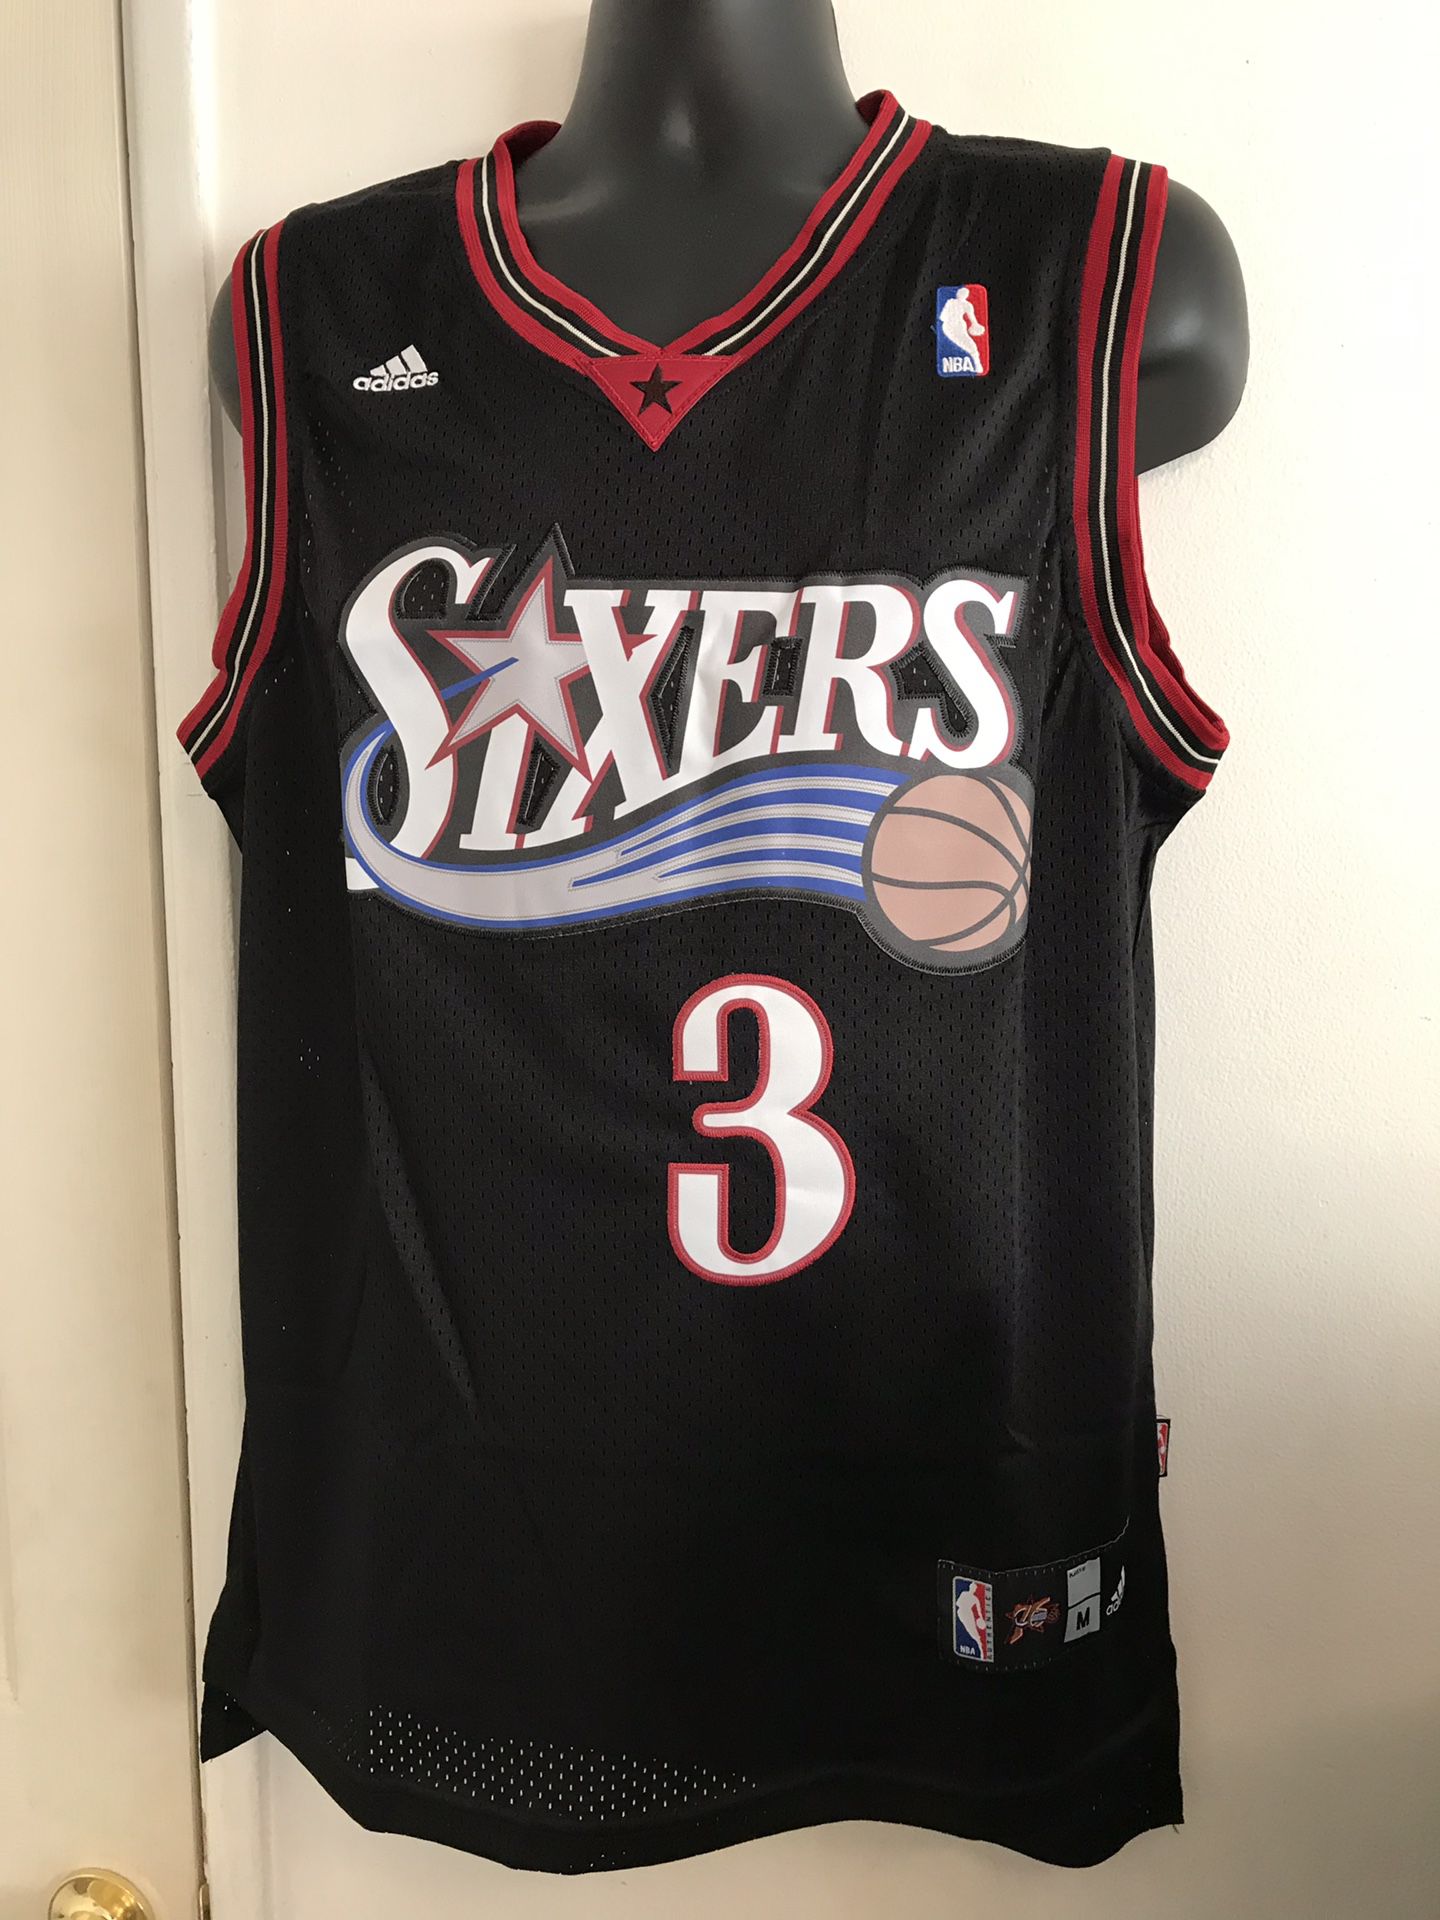 Philadelphia 76ers basketball 🏀 jersey of Allen Iverson size medium